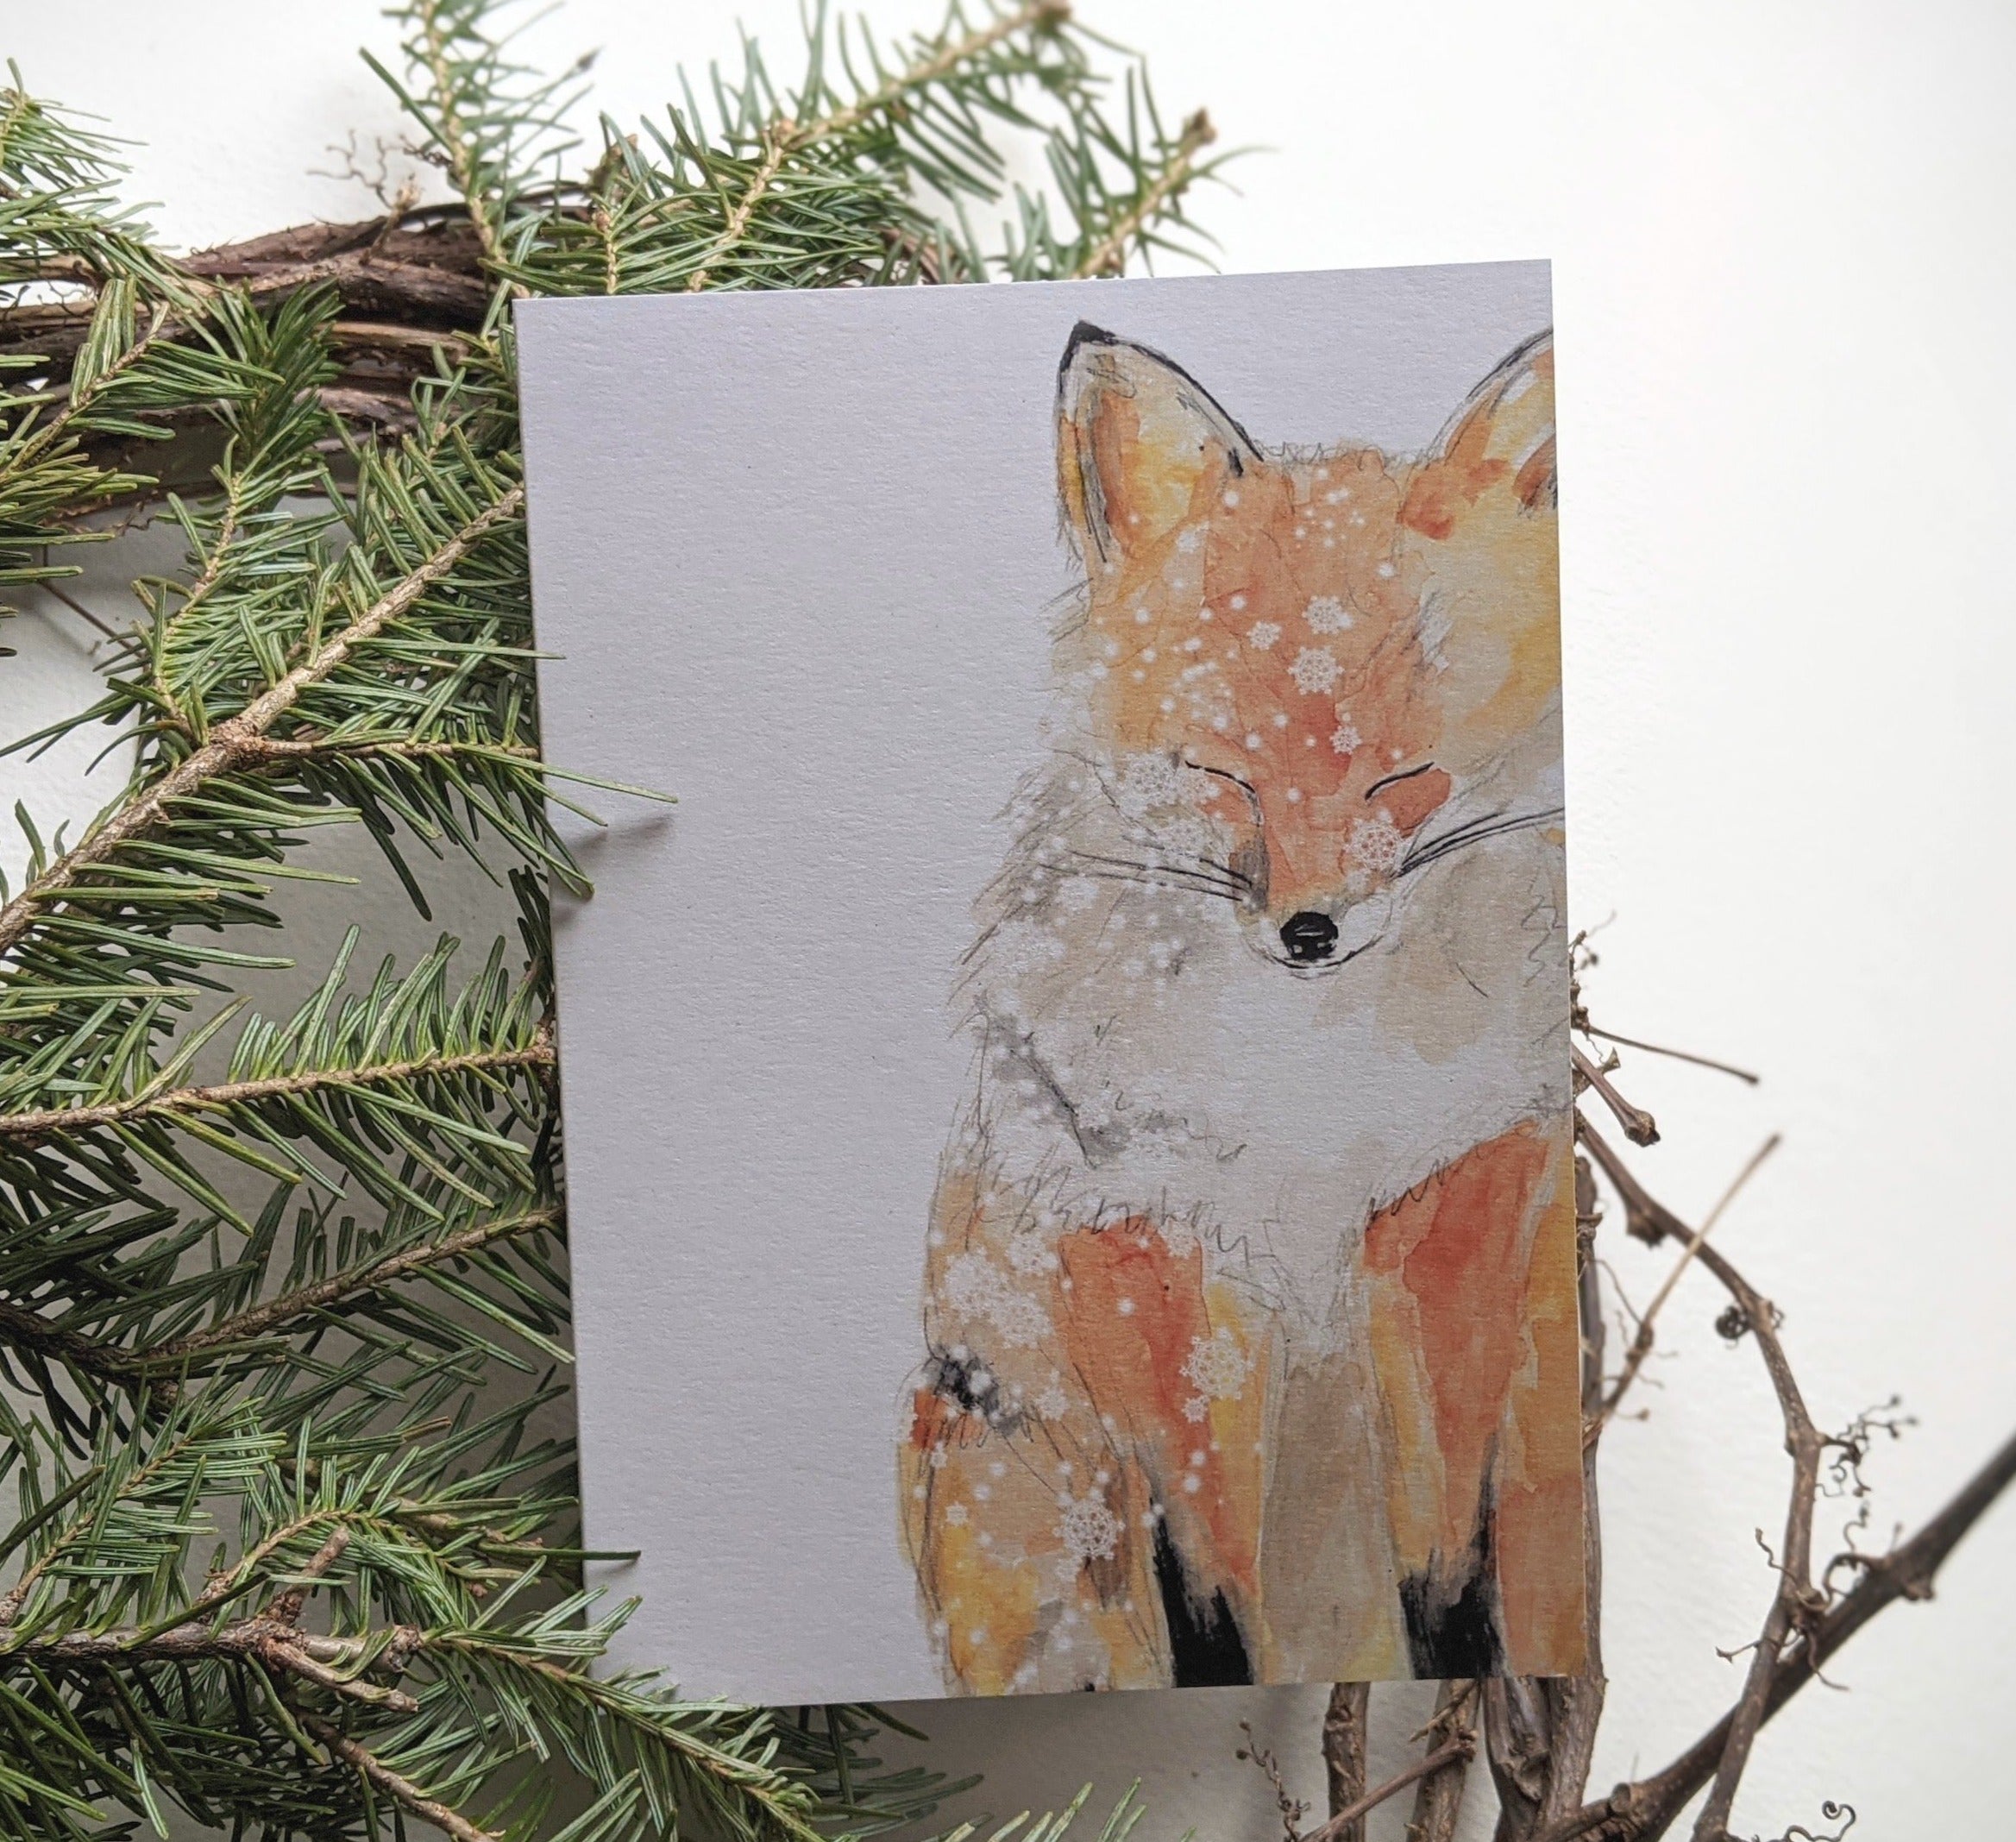 red fox enjoying snow fall